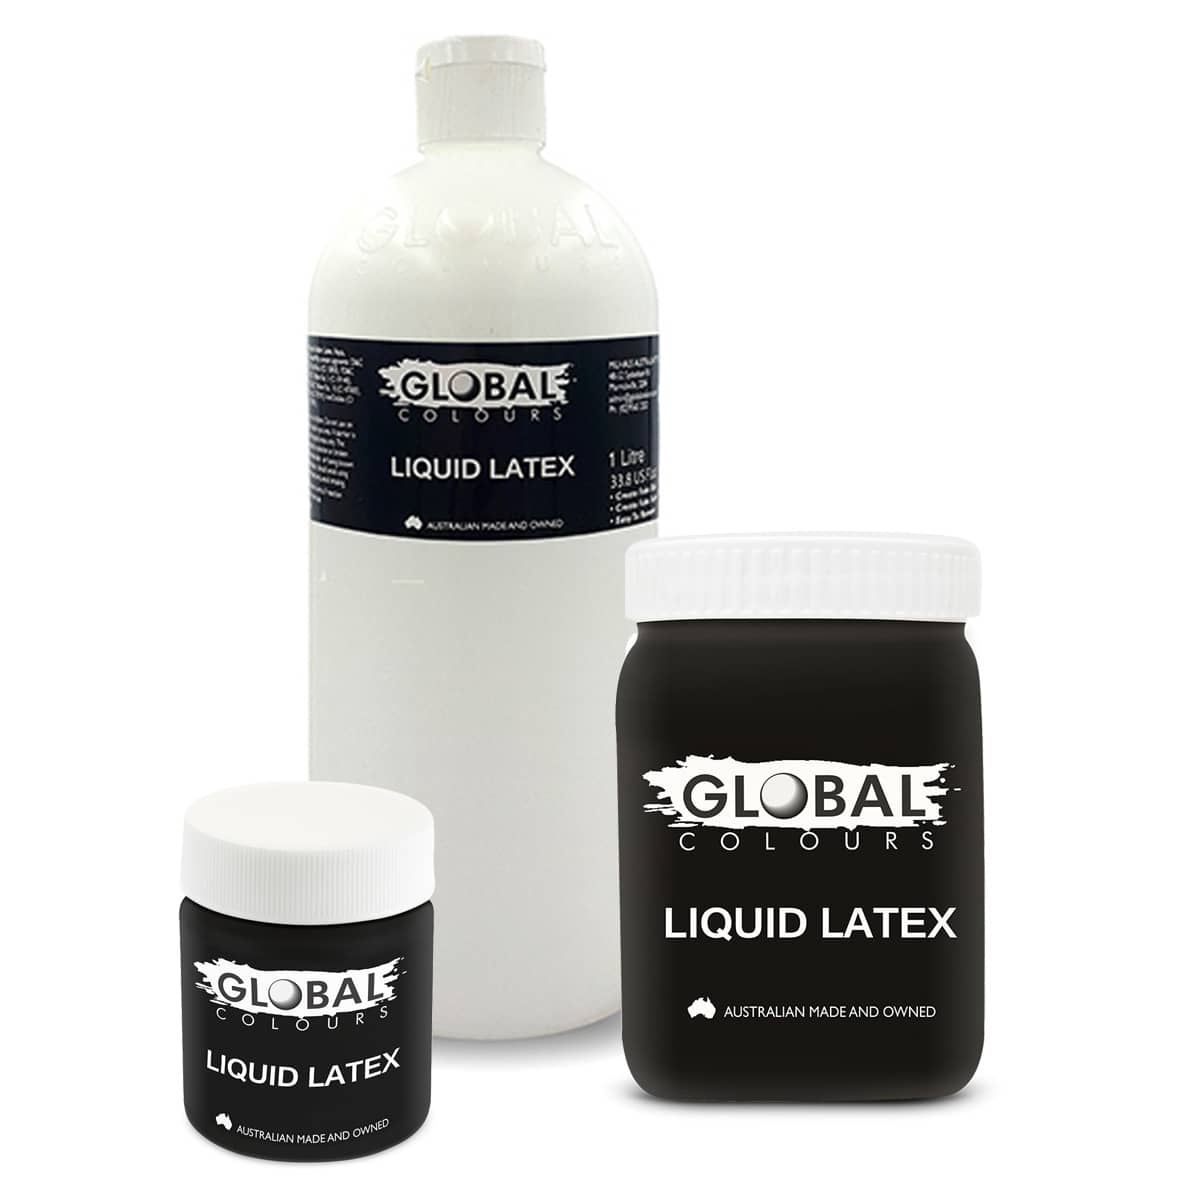 Global Colours Global Colours Liquid Latex